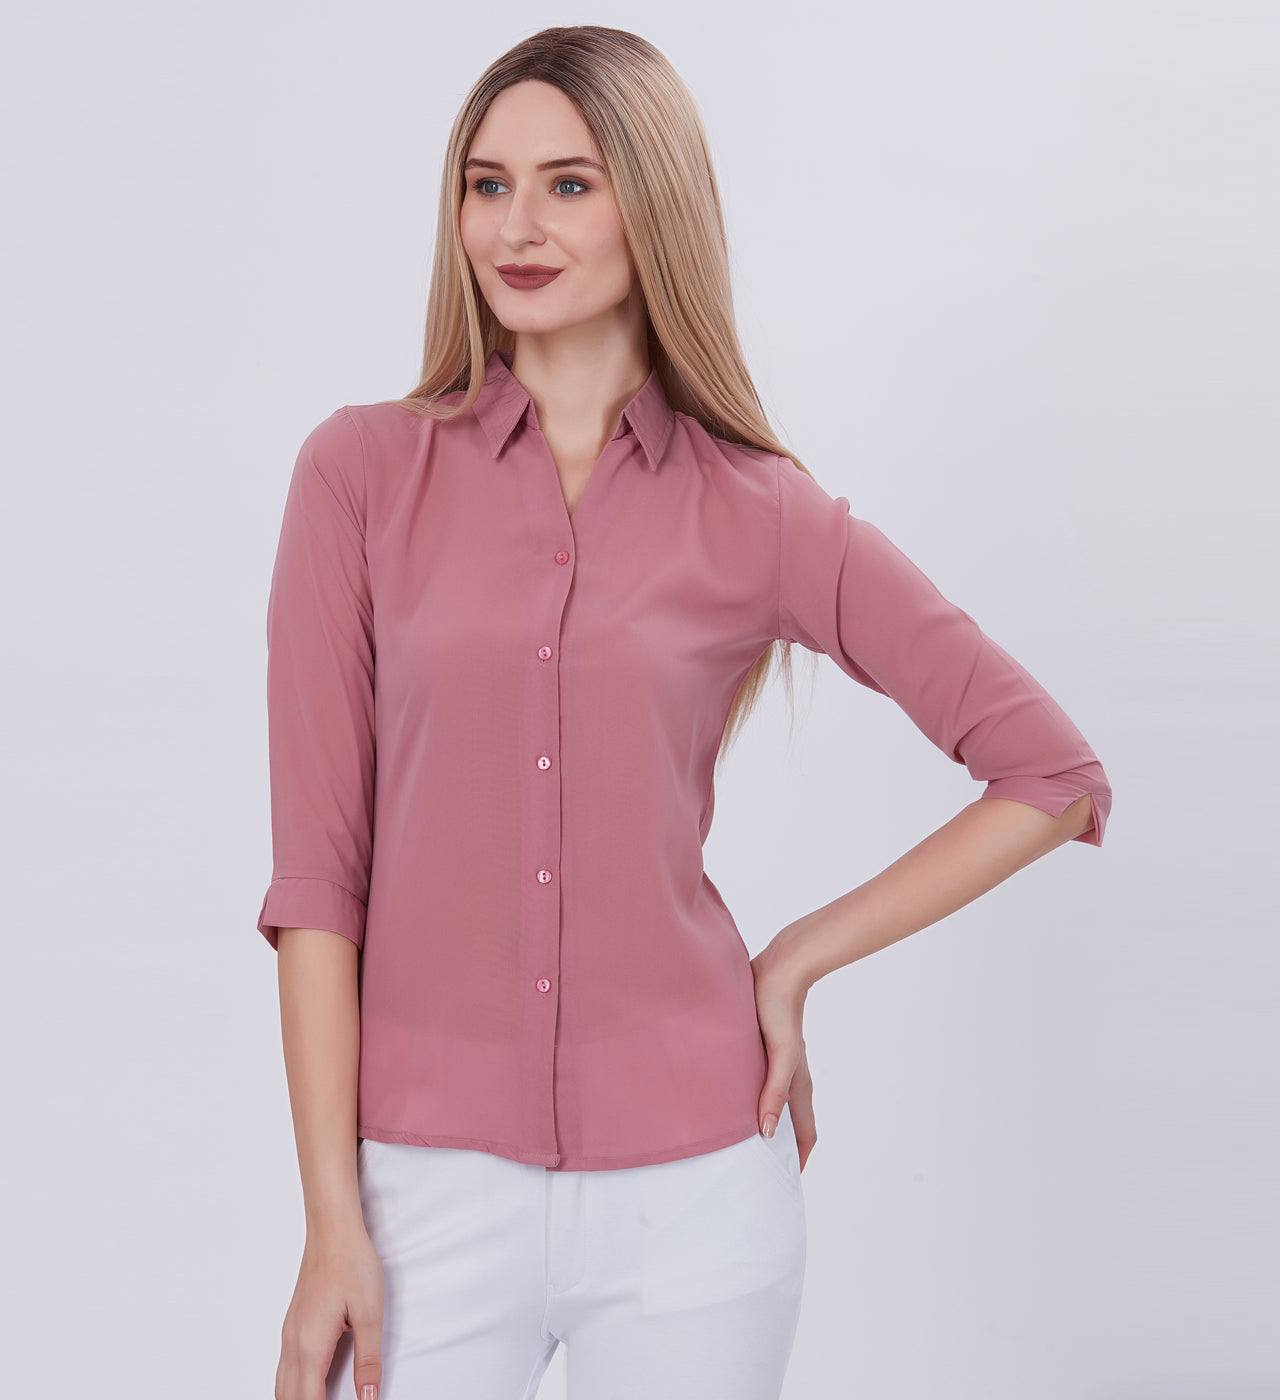 Blum Denim Women's (1001) Light Pink Formal Shirt with Shirt Collar, 3/4 Sleeves, in Pink Maska Killer Fabric